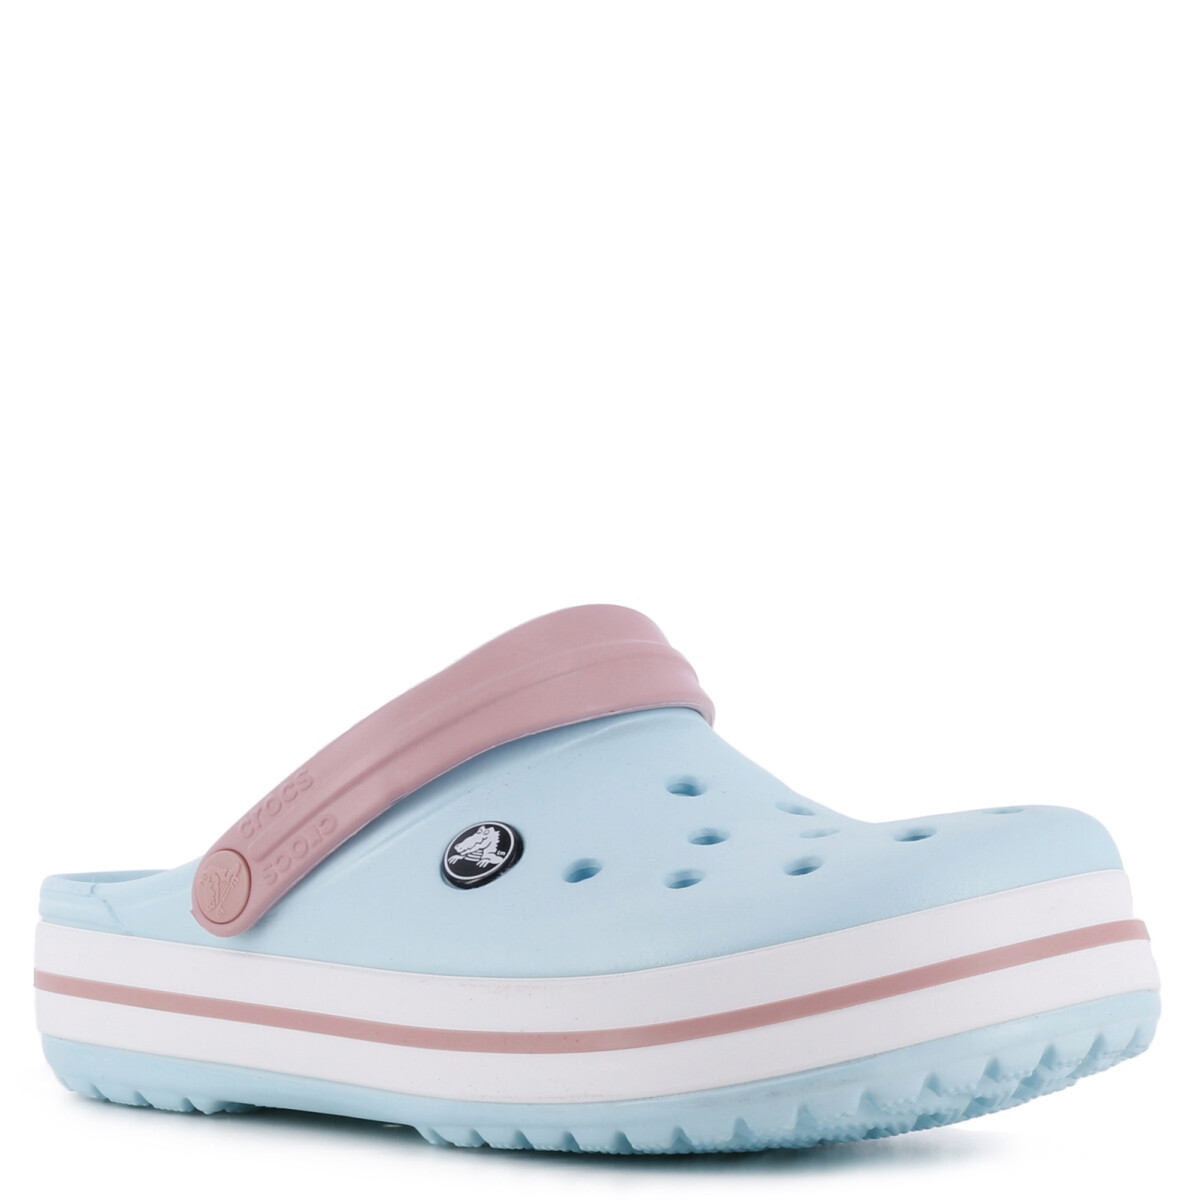 Crocband Clog Kids Crocs - Ice Blue/White 